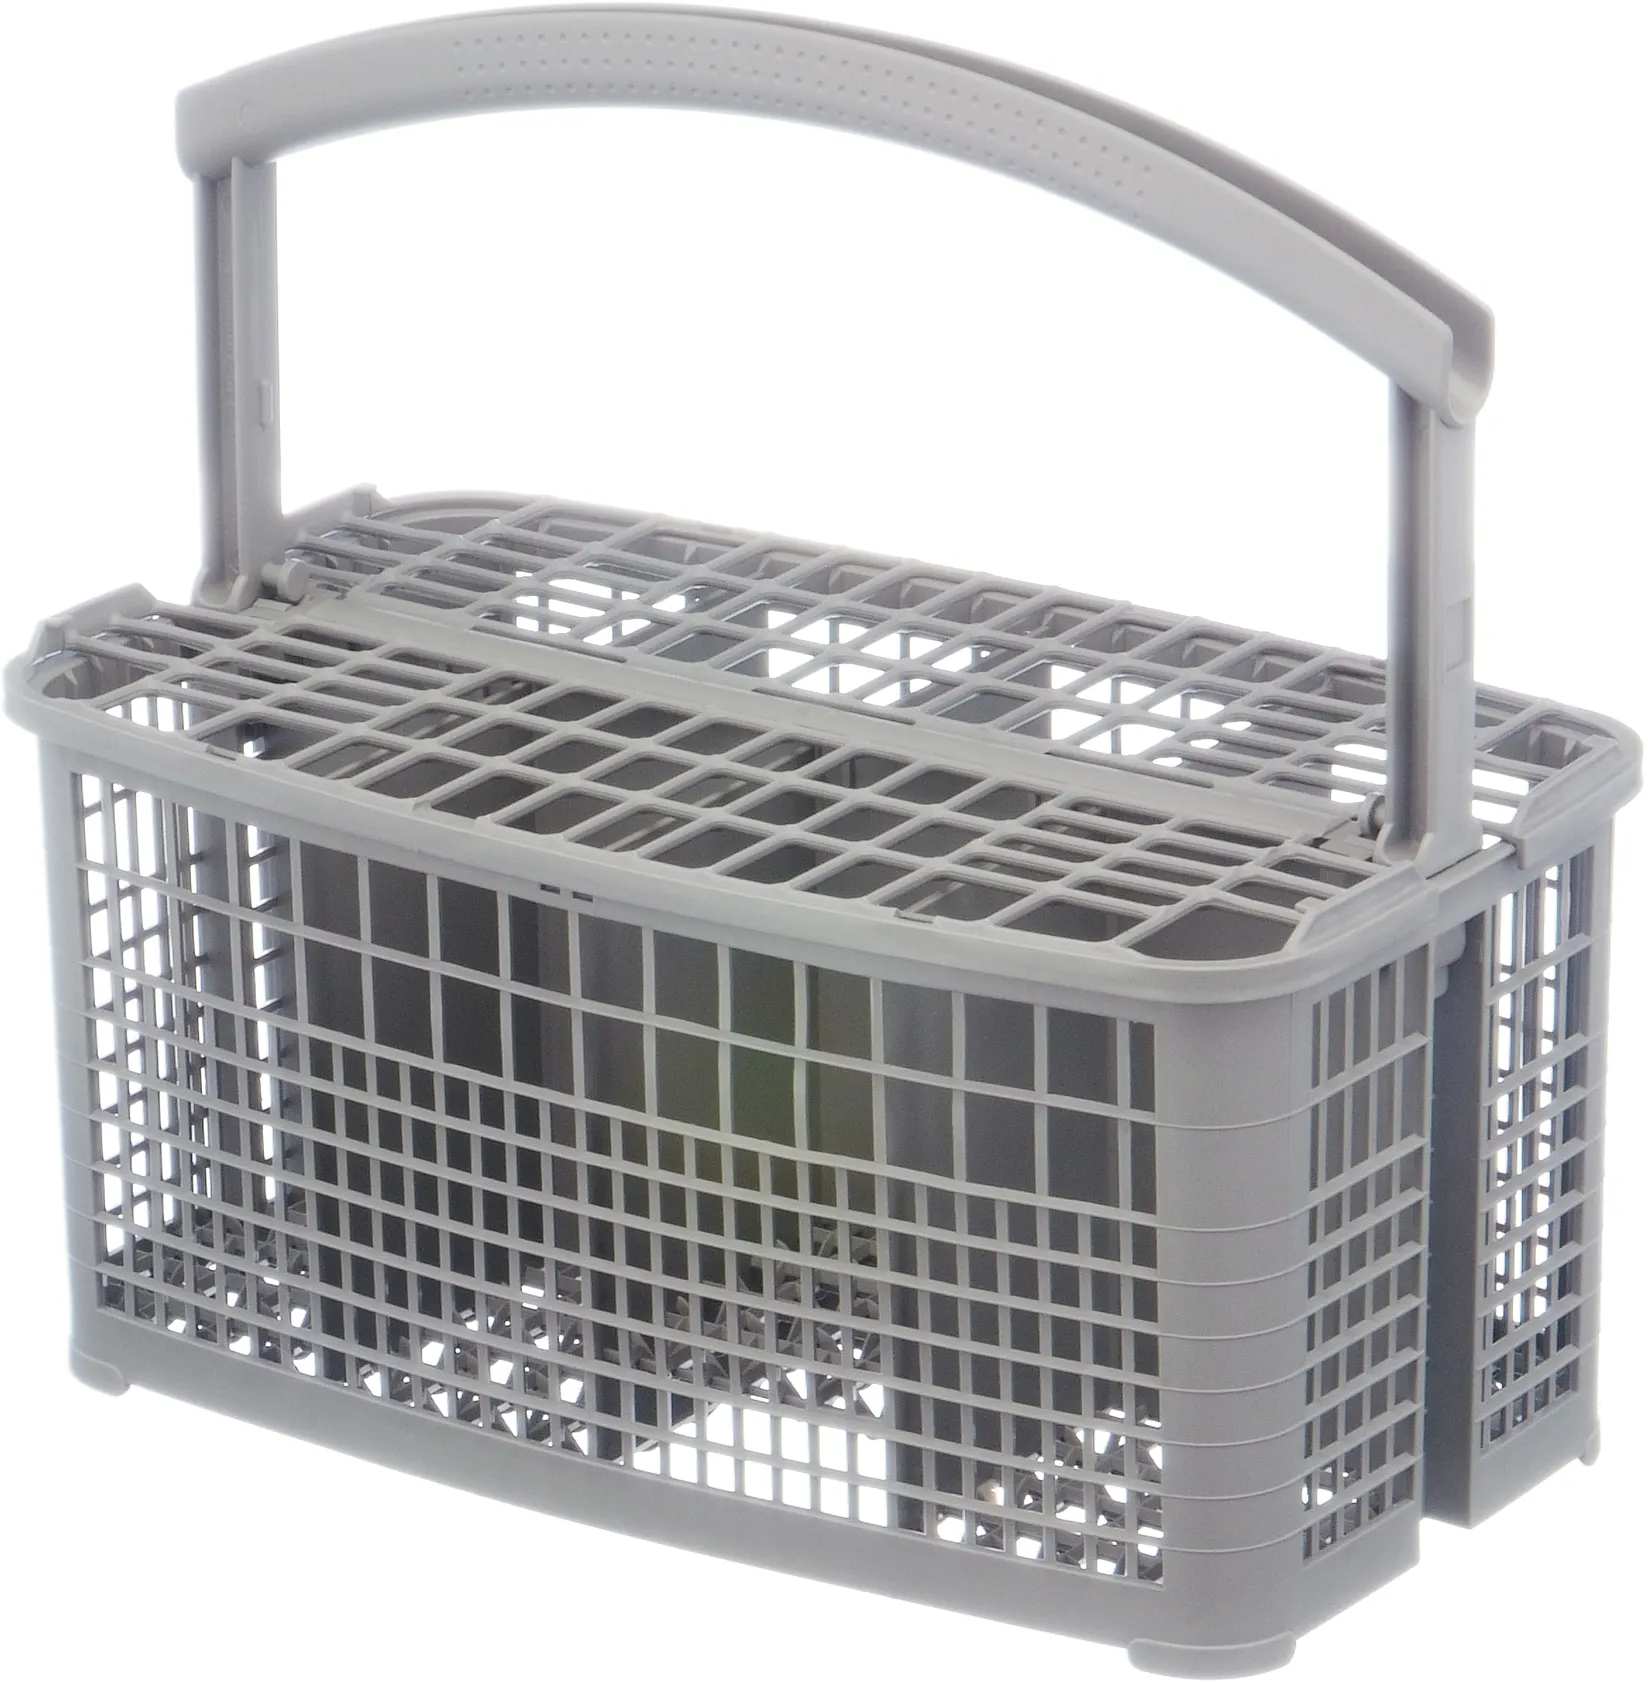 Dishwasher Cutlery Basket 